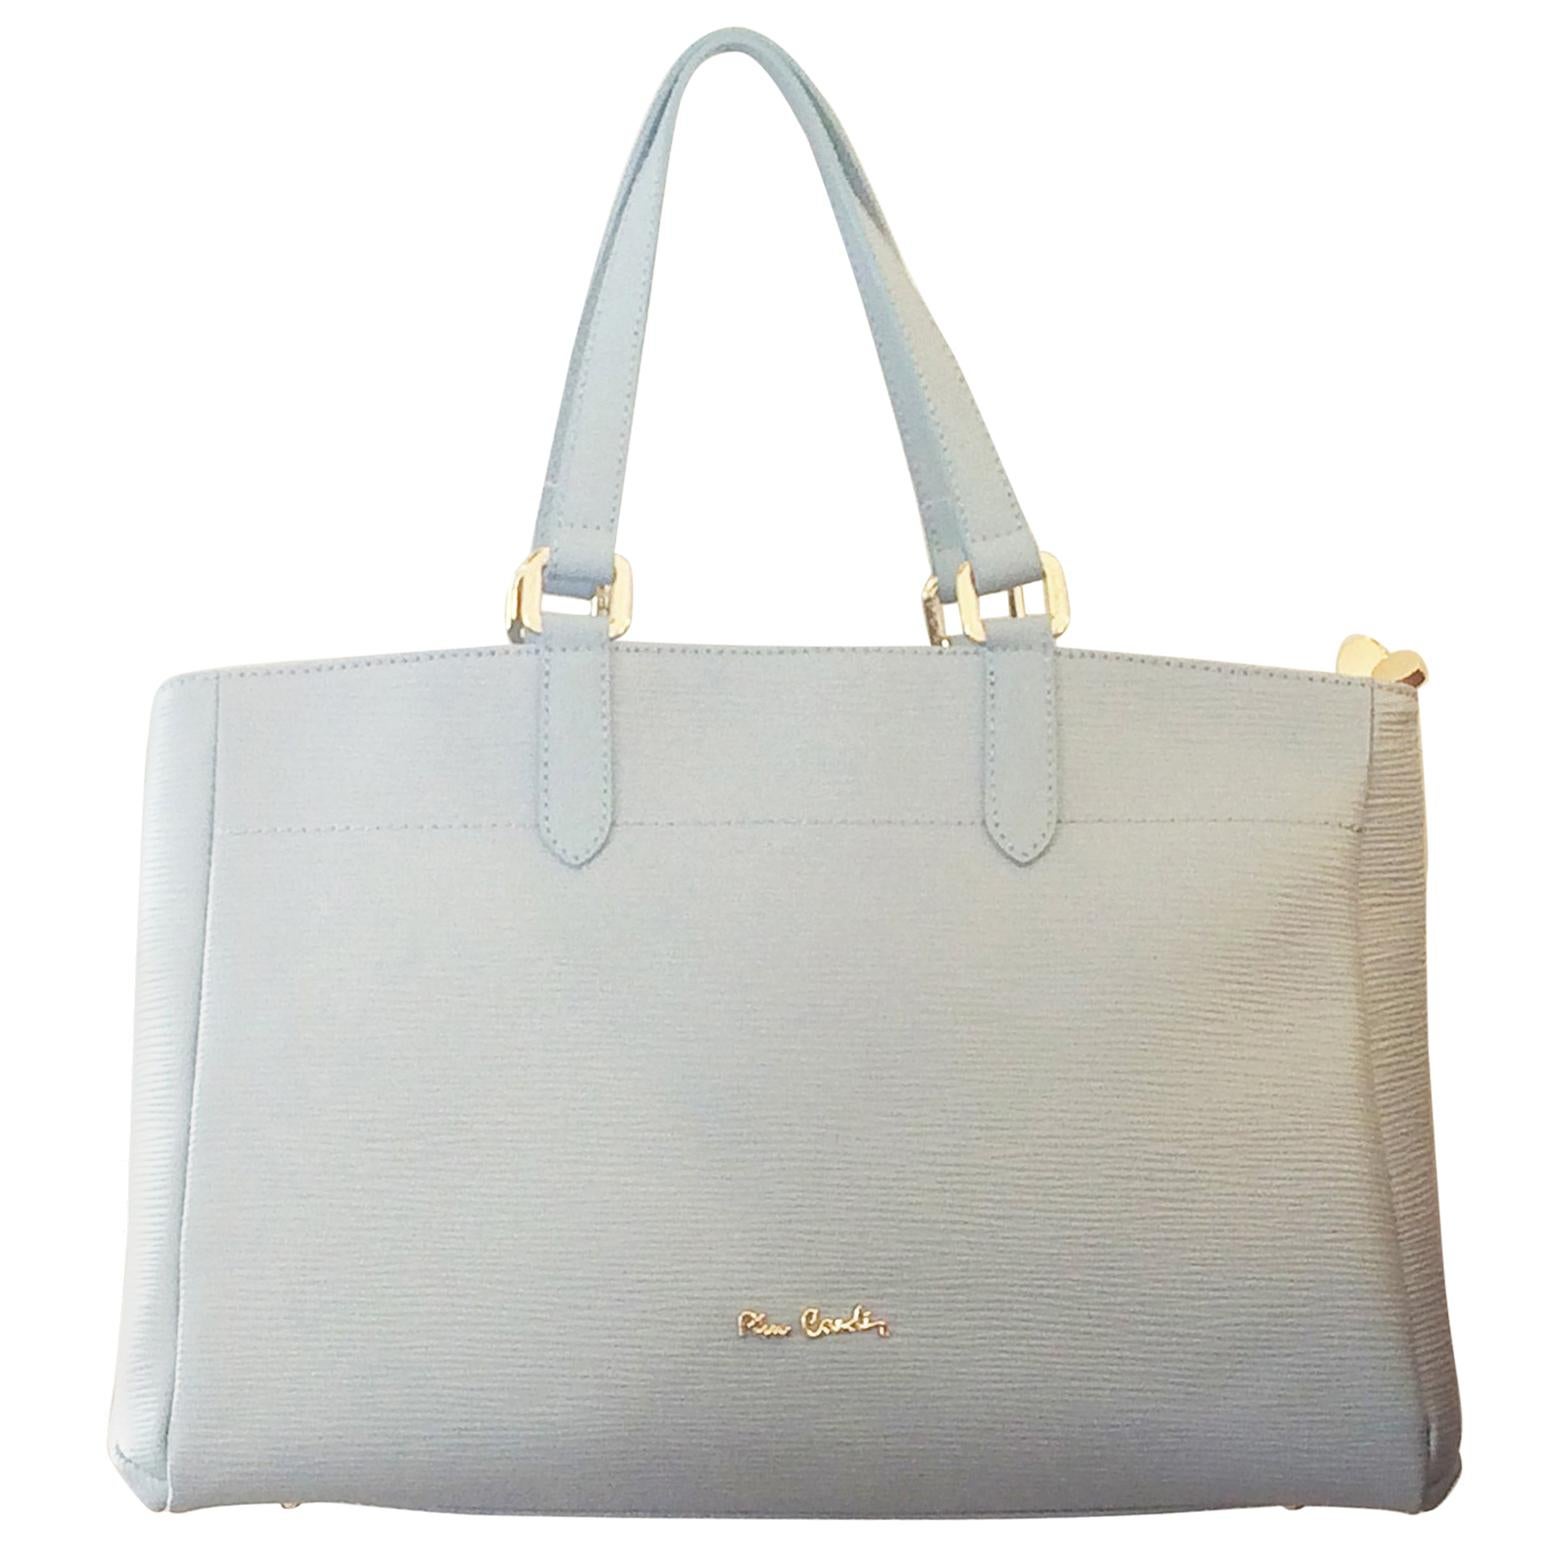 Pierre Cardin Pale Baby Blue Leather handbag bag 